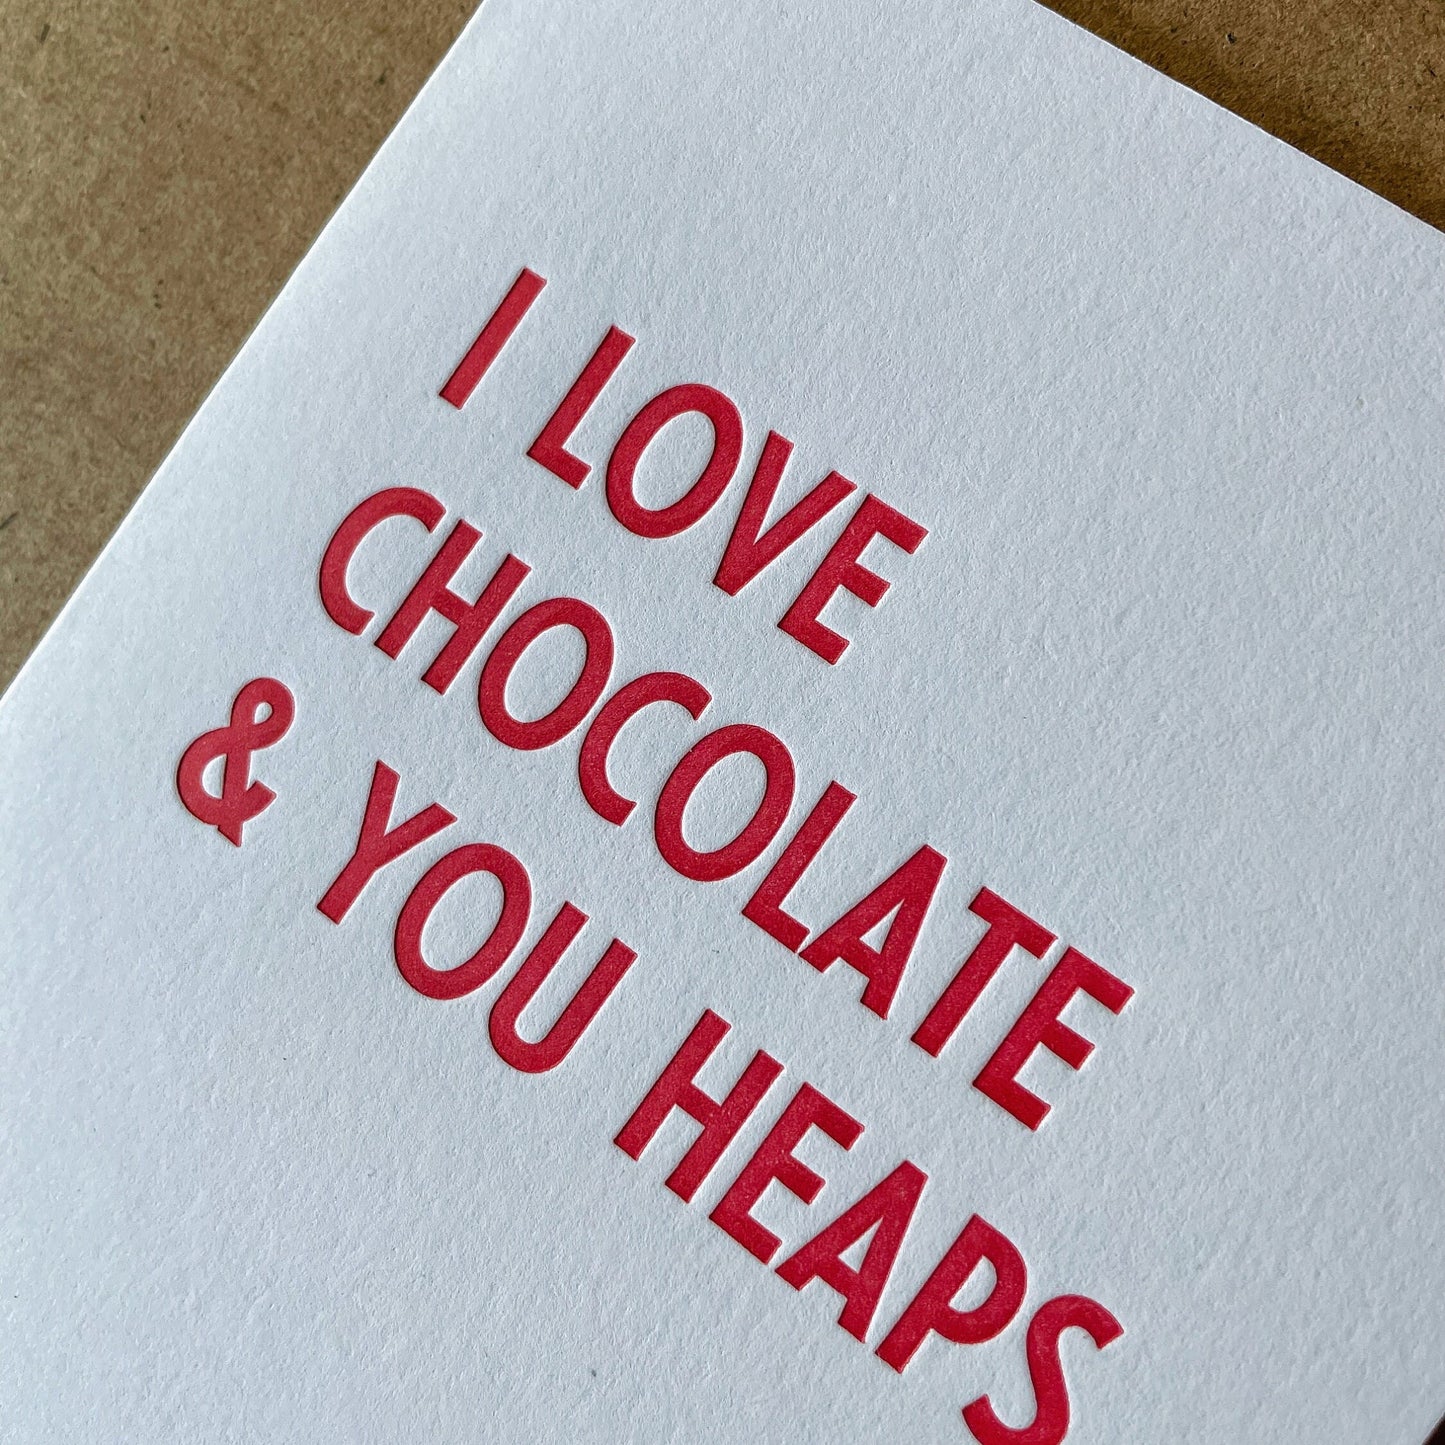 I Love Chocolate & You Heaps - Letterpress Card